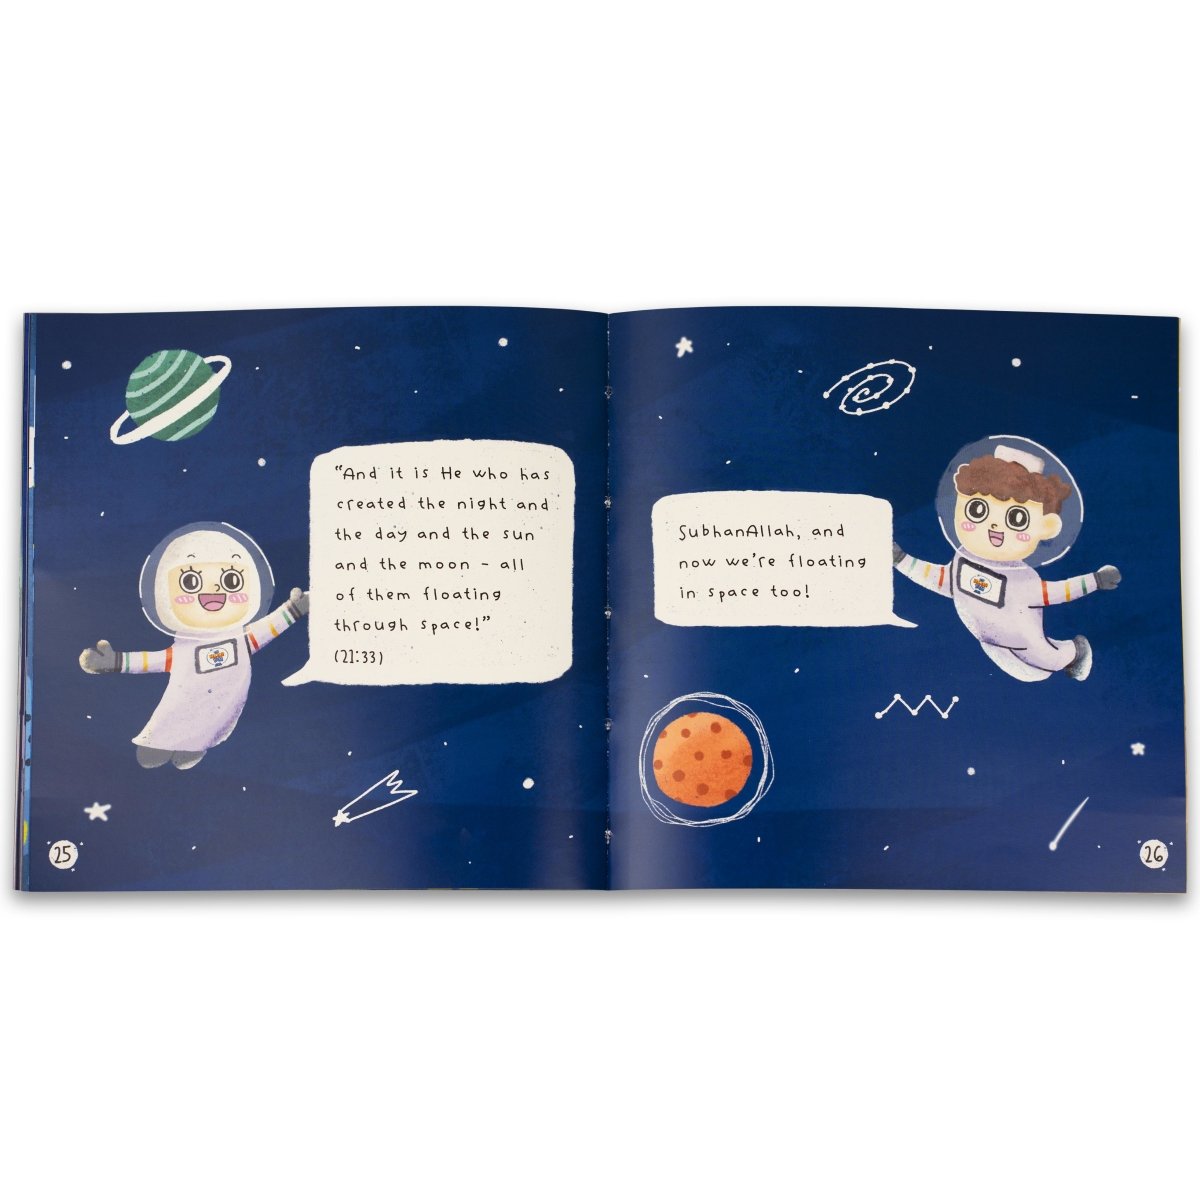 PRE SALE - Ramadan in Space | Children's Book - Divinity Collection